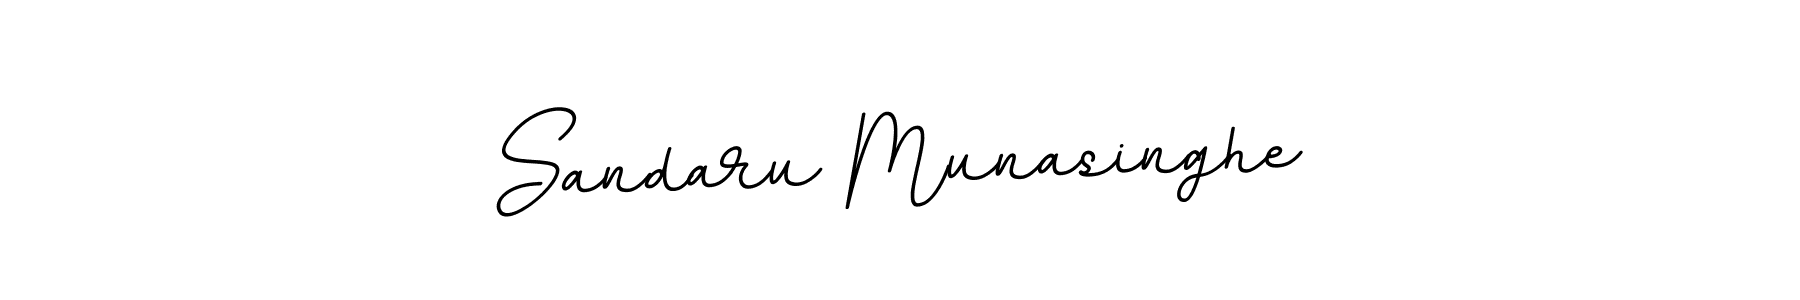 How to Draw Sandaru Munasinghe signature style? BallpointsItalic-DORy9 is a latest design signature styles for name Sandaru Munasinghe. Sandaru Munasinghe signature style 11 images and pictures png